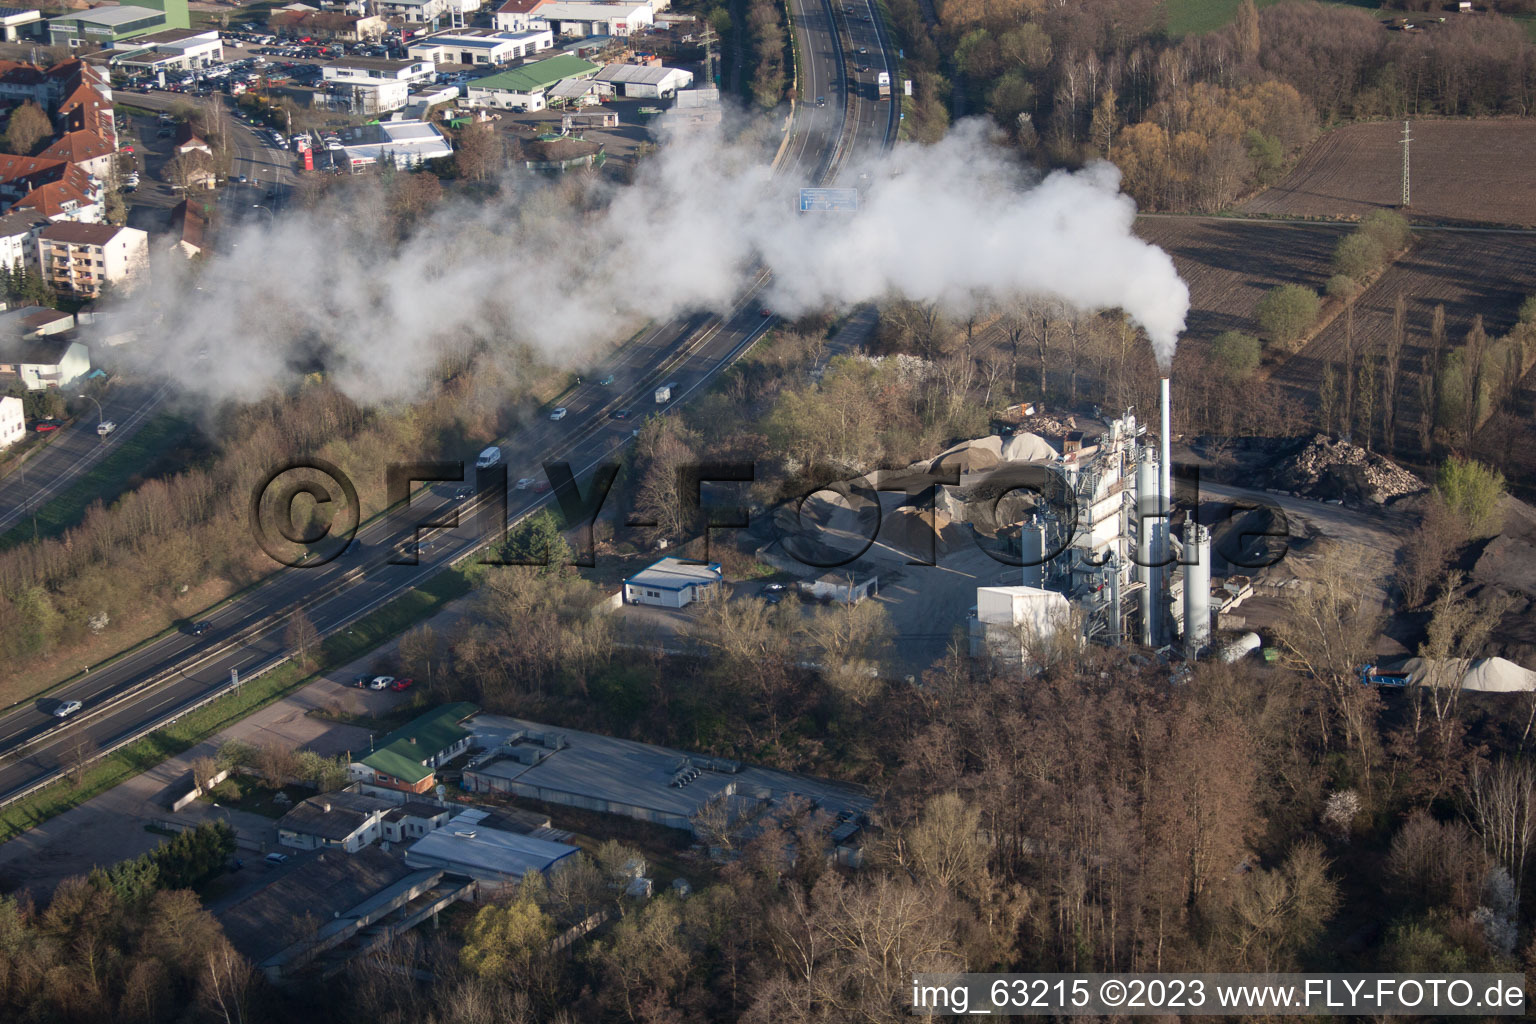 Oblique view of Asphalt plant in Landau in der Pfalz in the state Rhineland-Palatinate, Germany